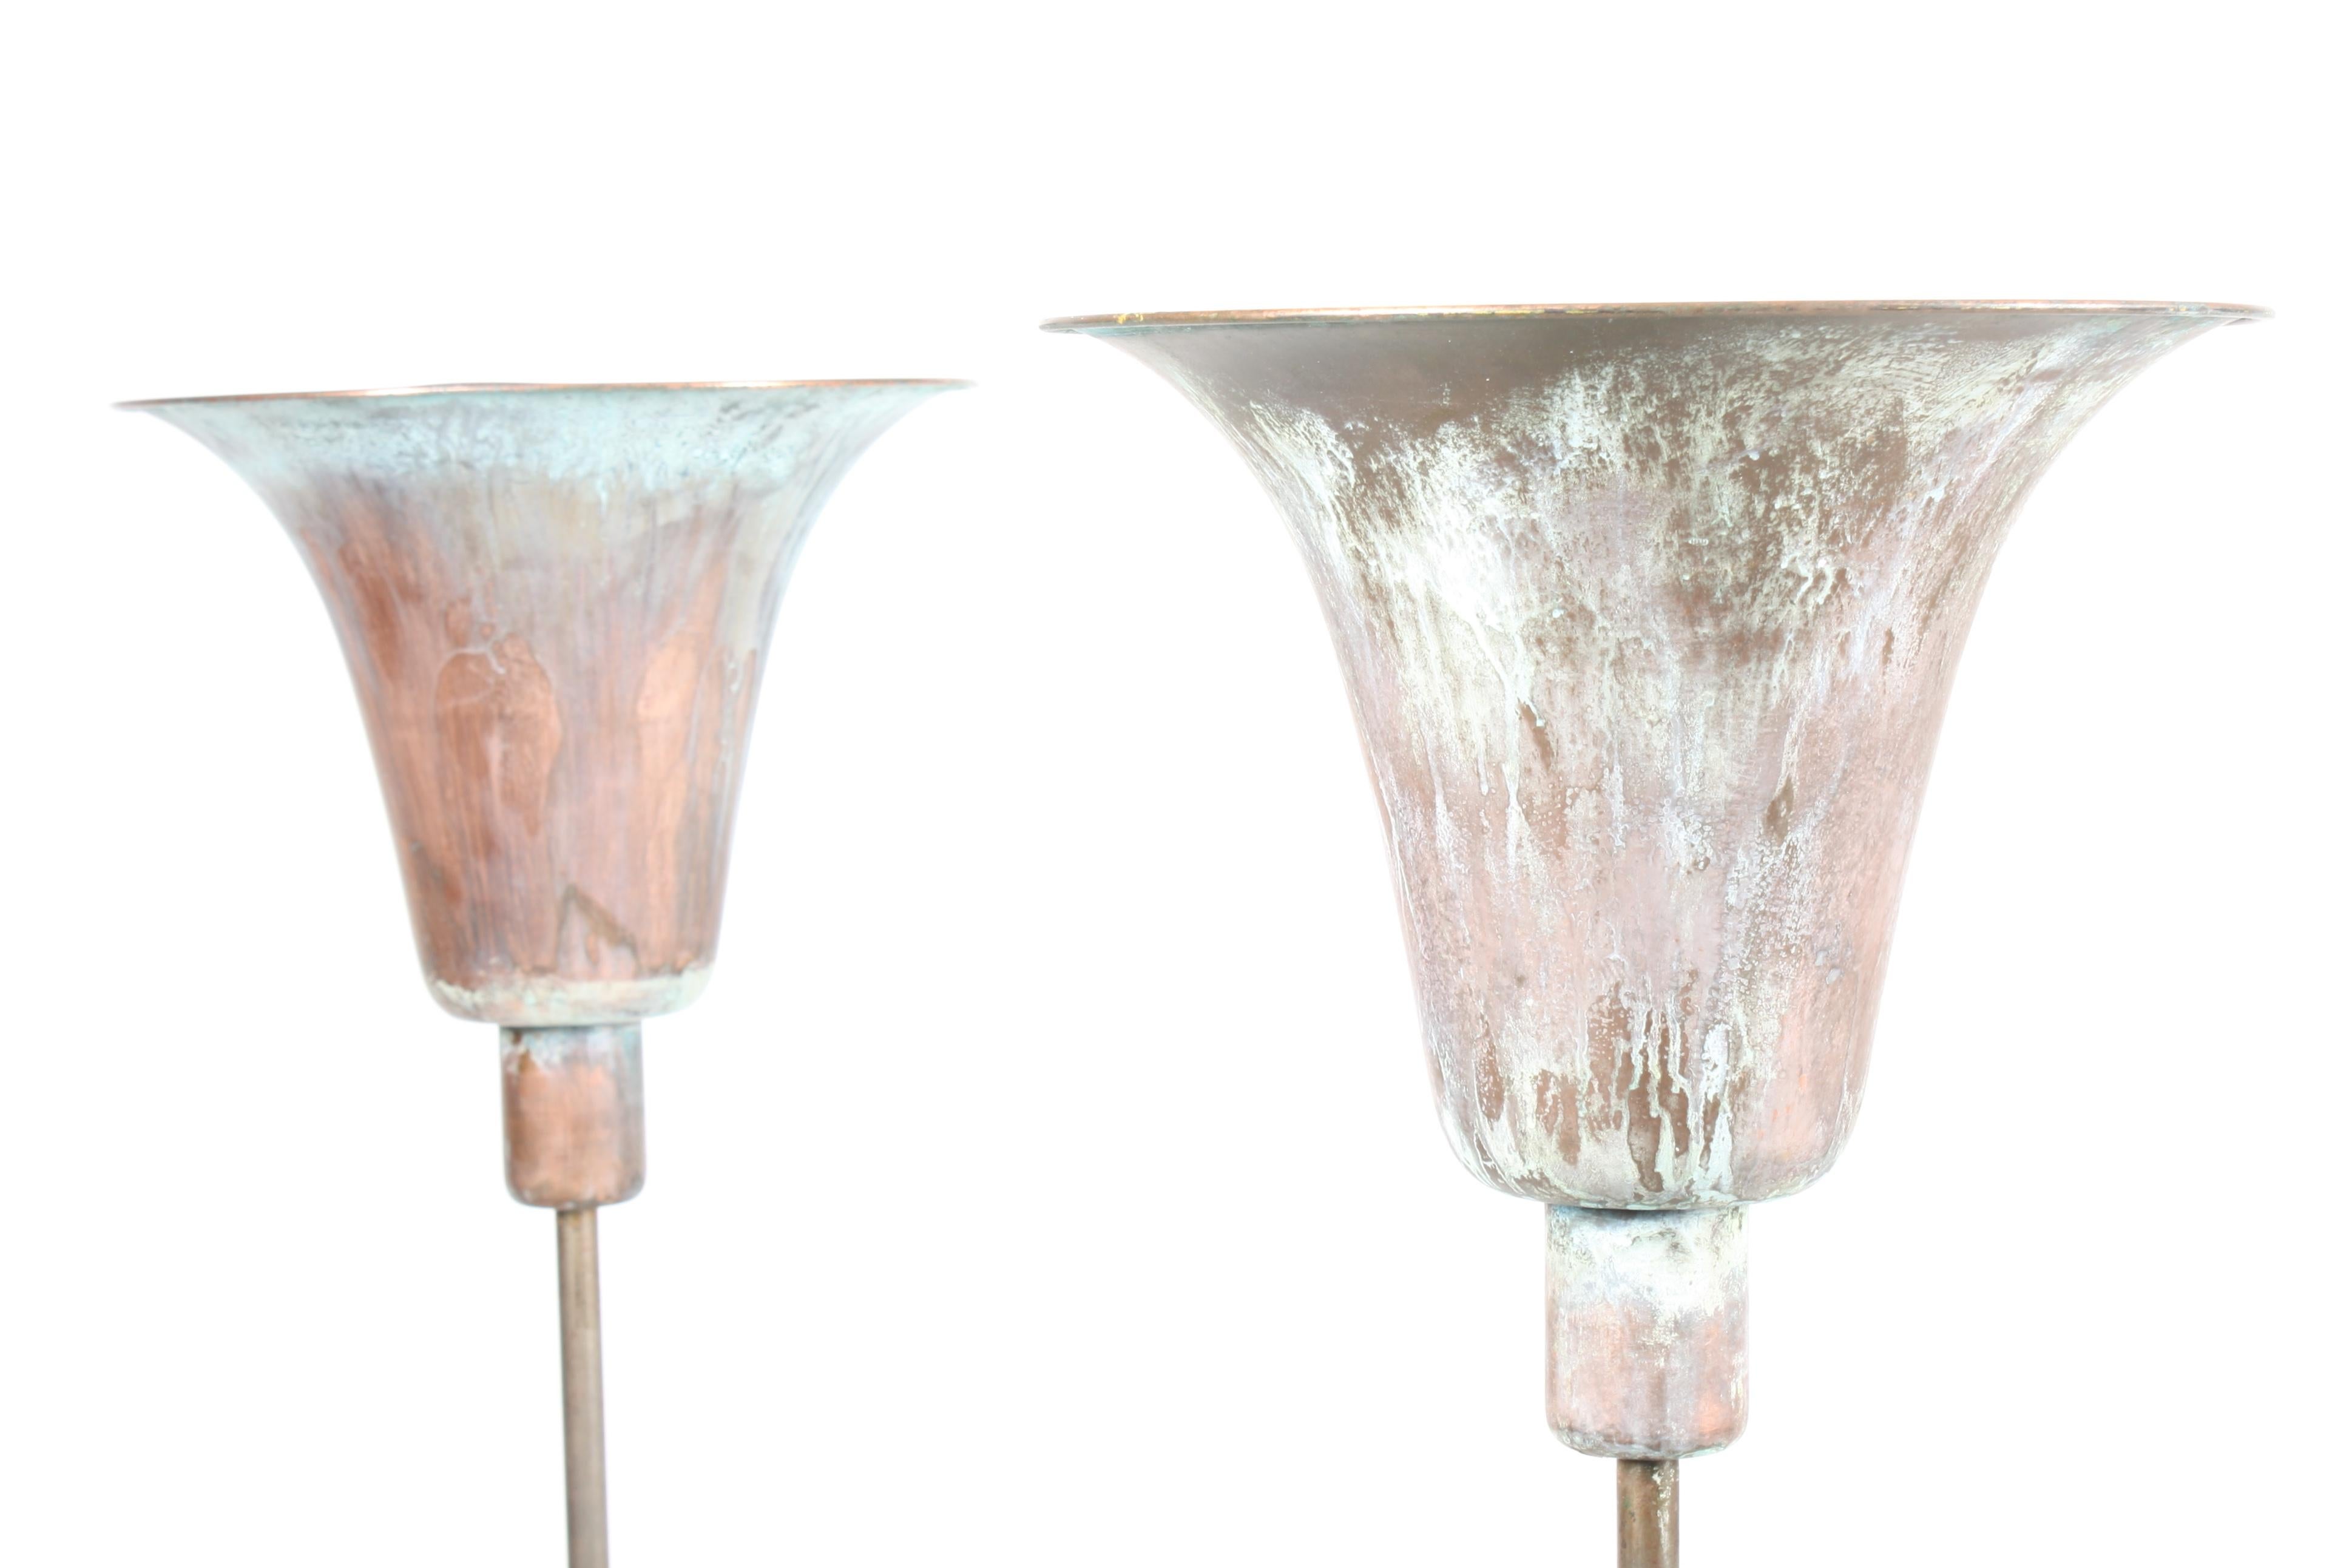 Scandinavian Modern Pair of Uplights in Painted Copper, Designed in 1940s by Louis Poulsen